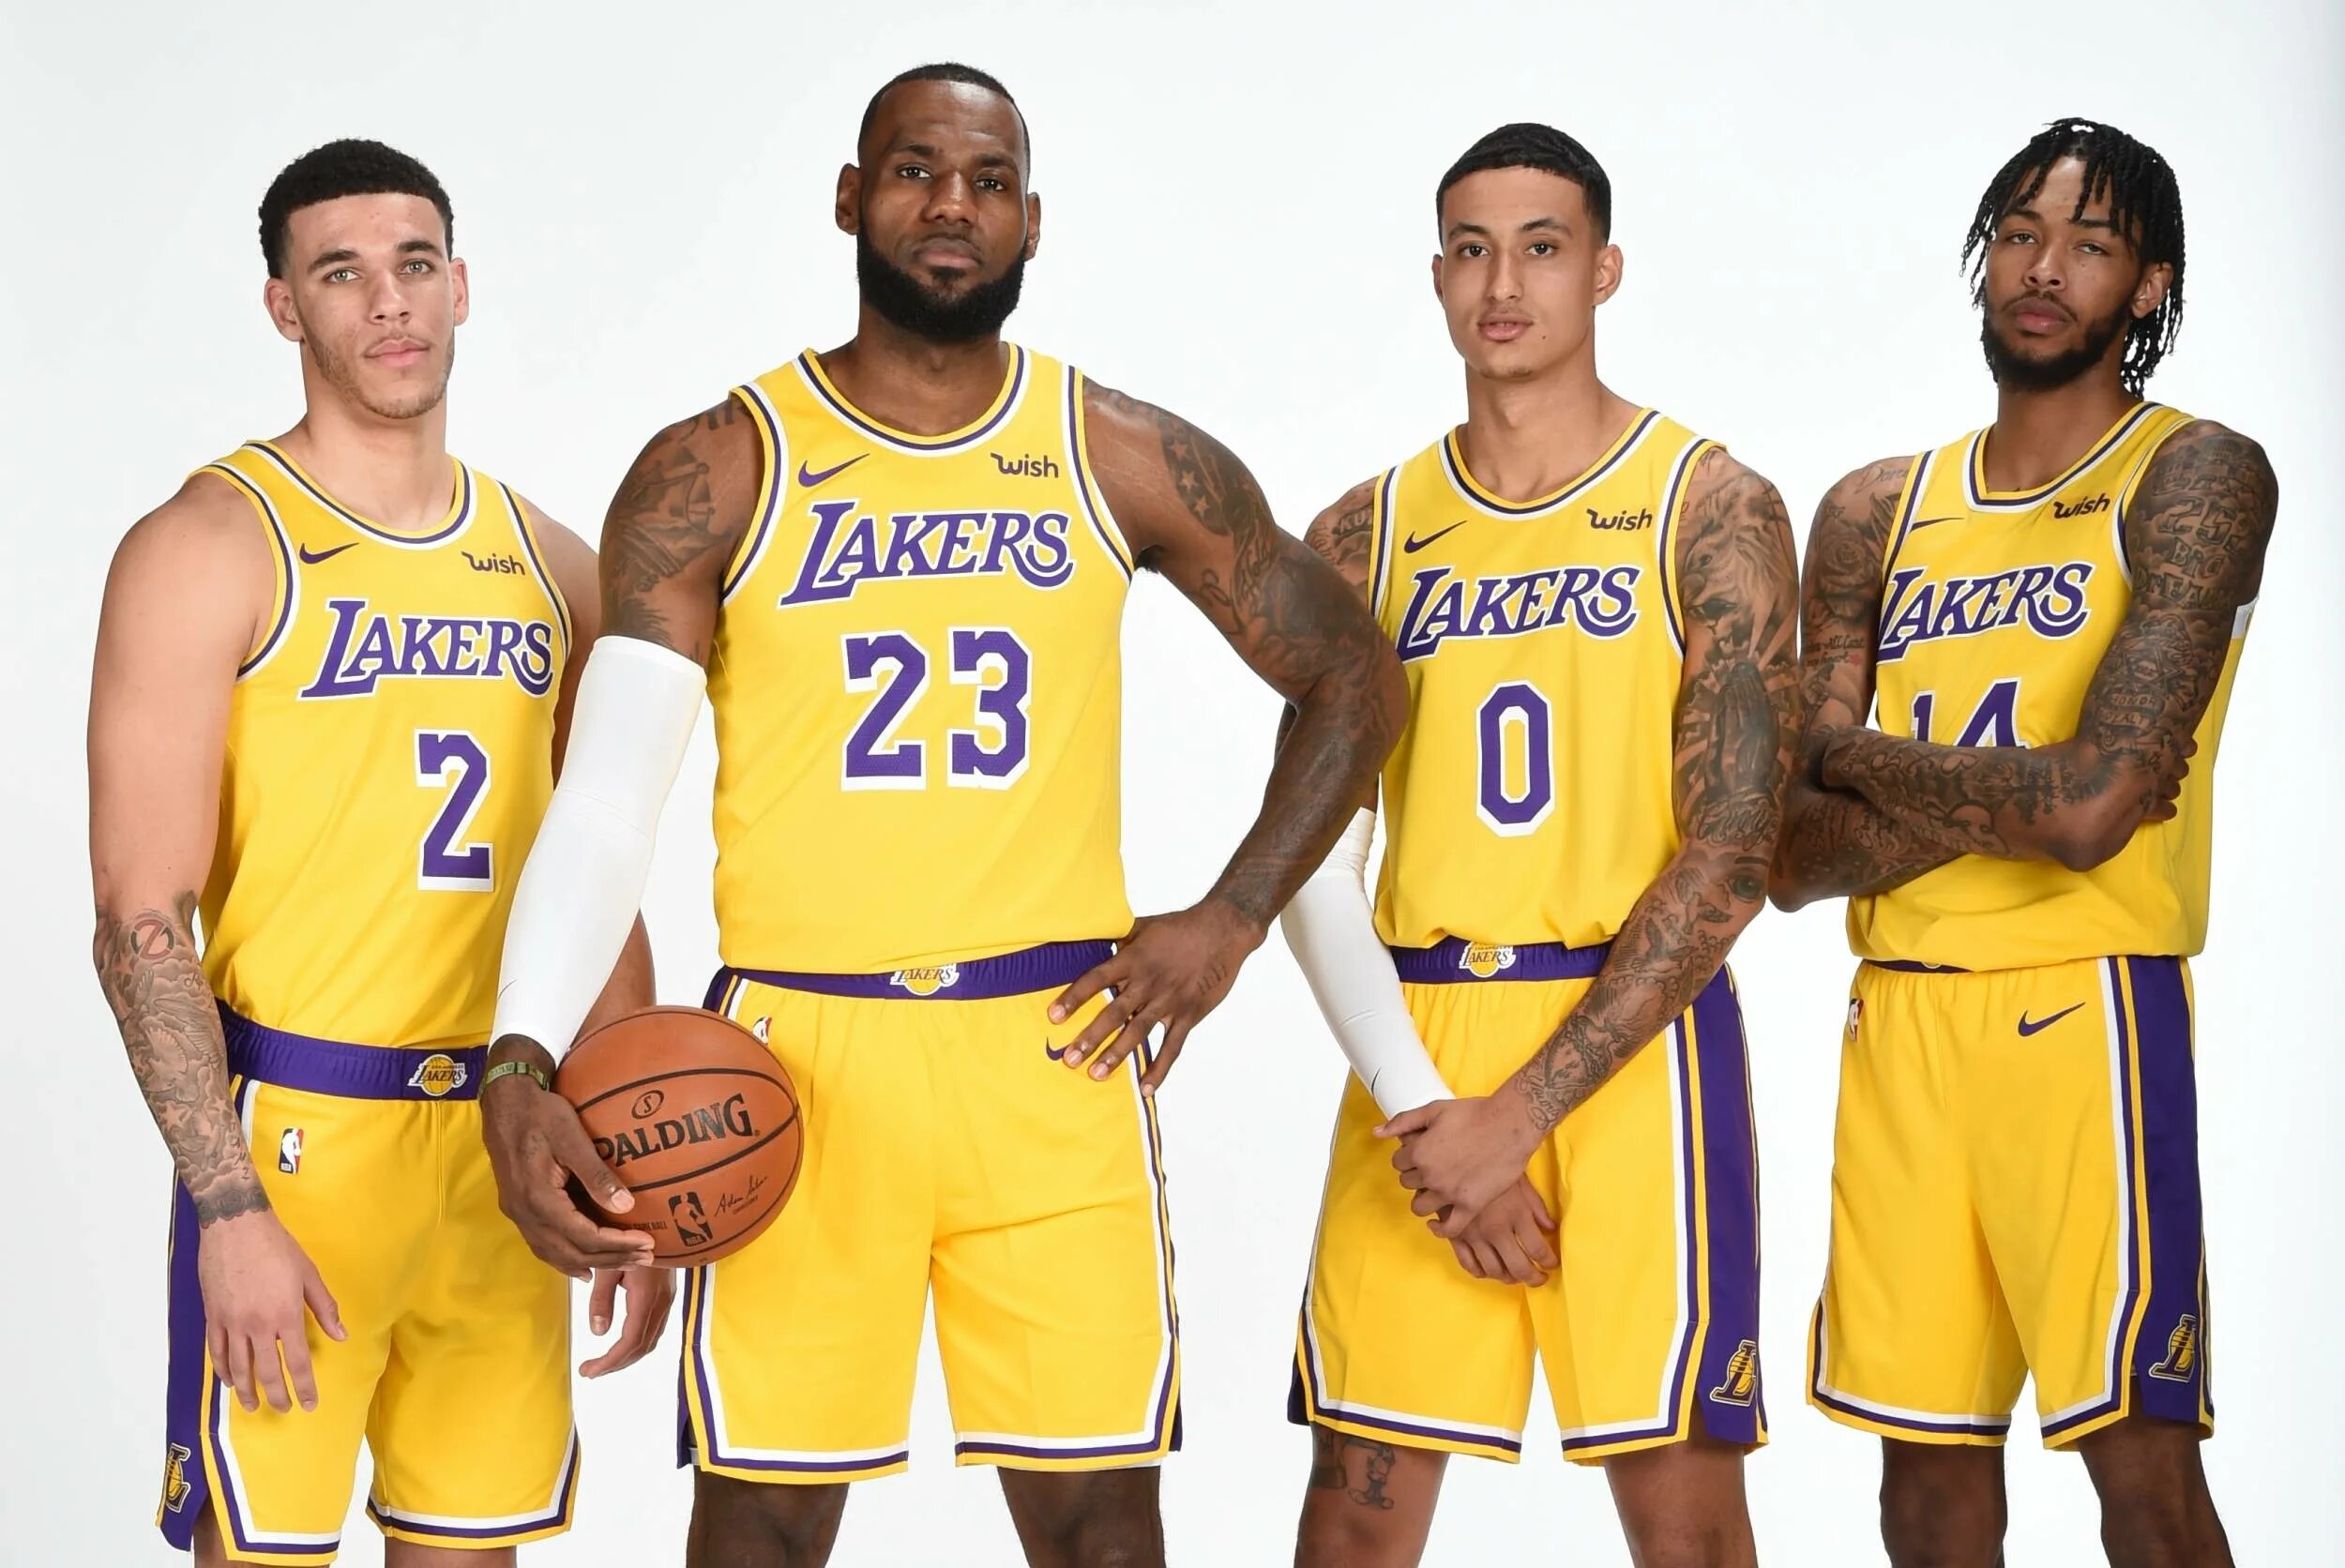 La lakers. Команда Lakers. Баскетбольная команда Лейкерс. Баскетбольная команда Лос Анджелес. Lakers 13 номер.